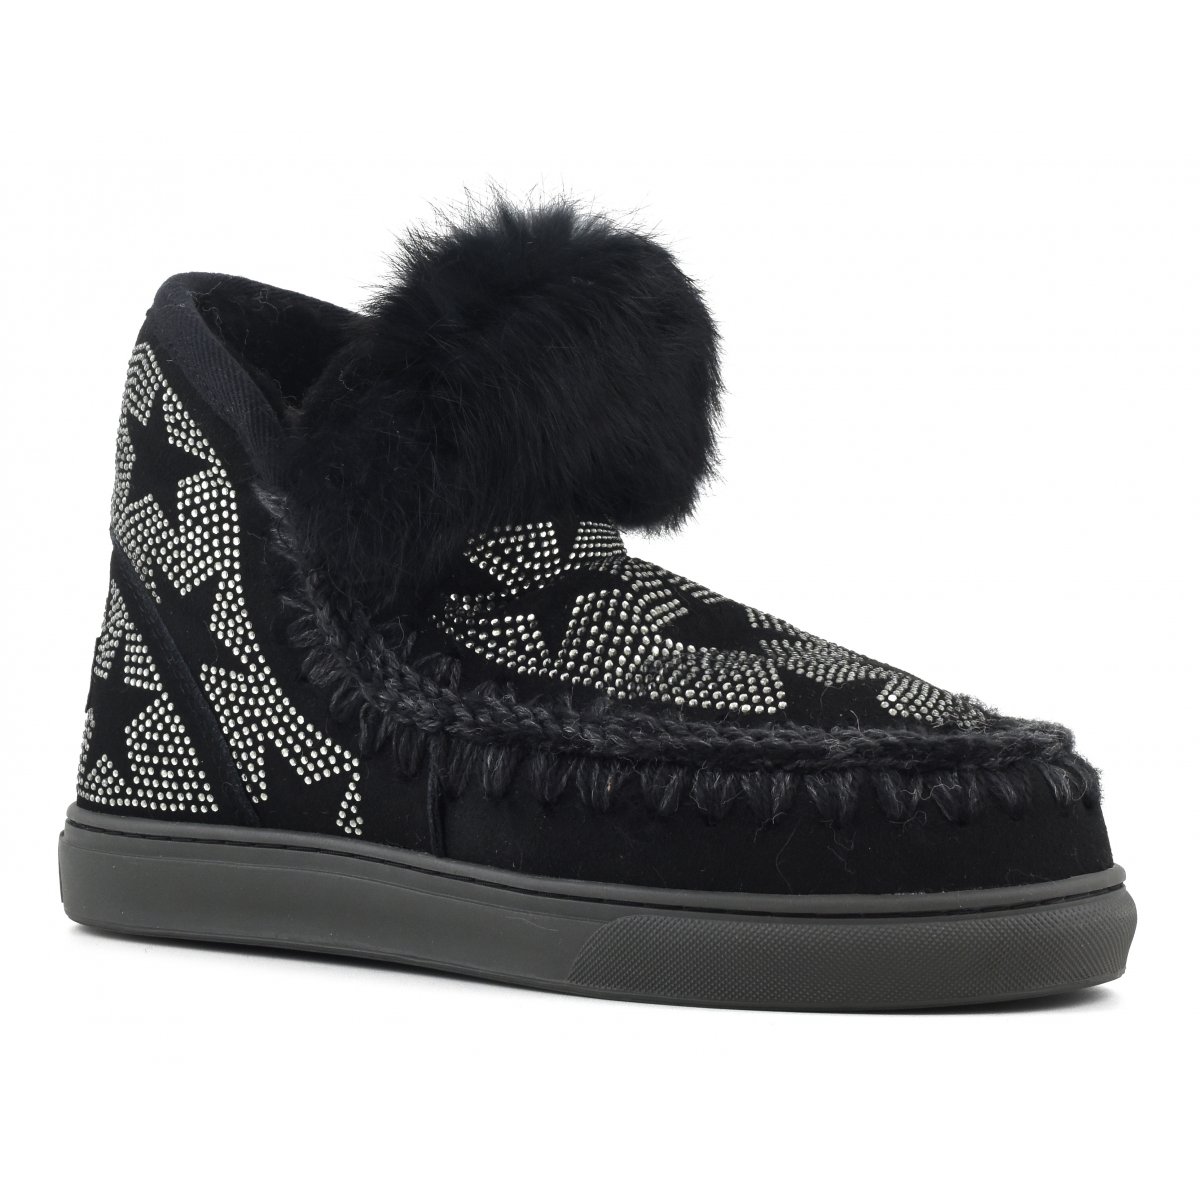 Eskimo sneaker hotfix stars pattern & fur trim BKBK img 2